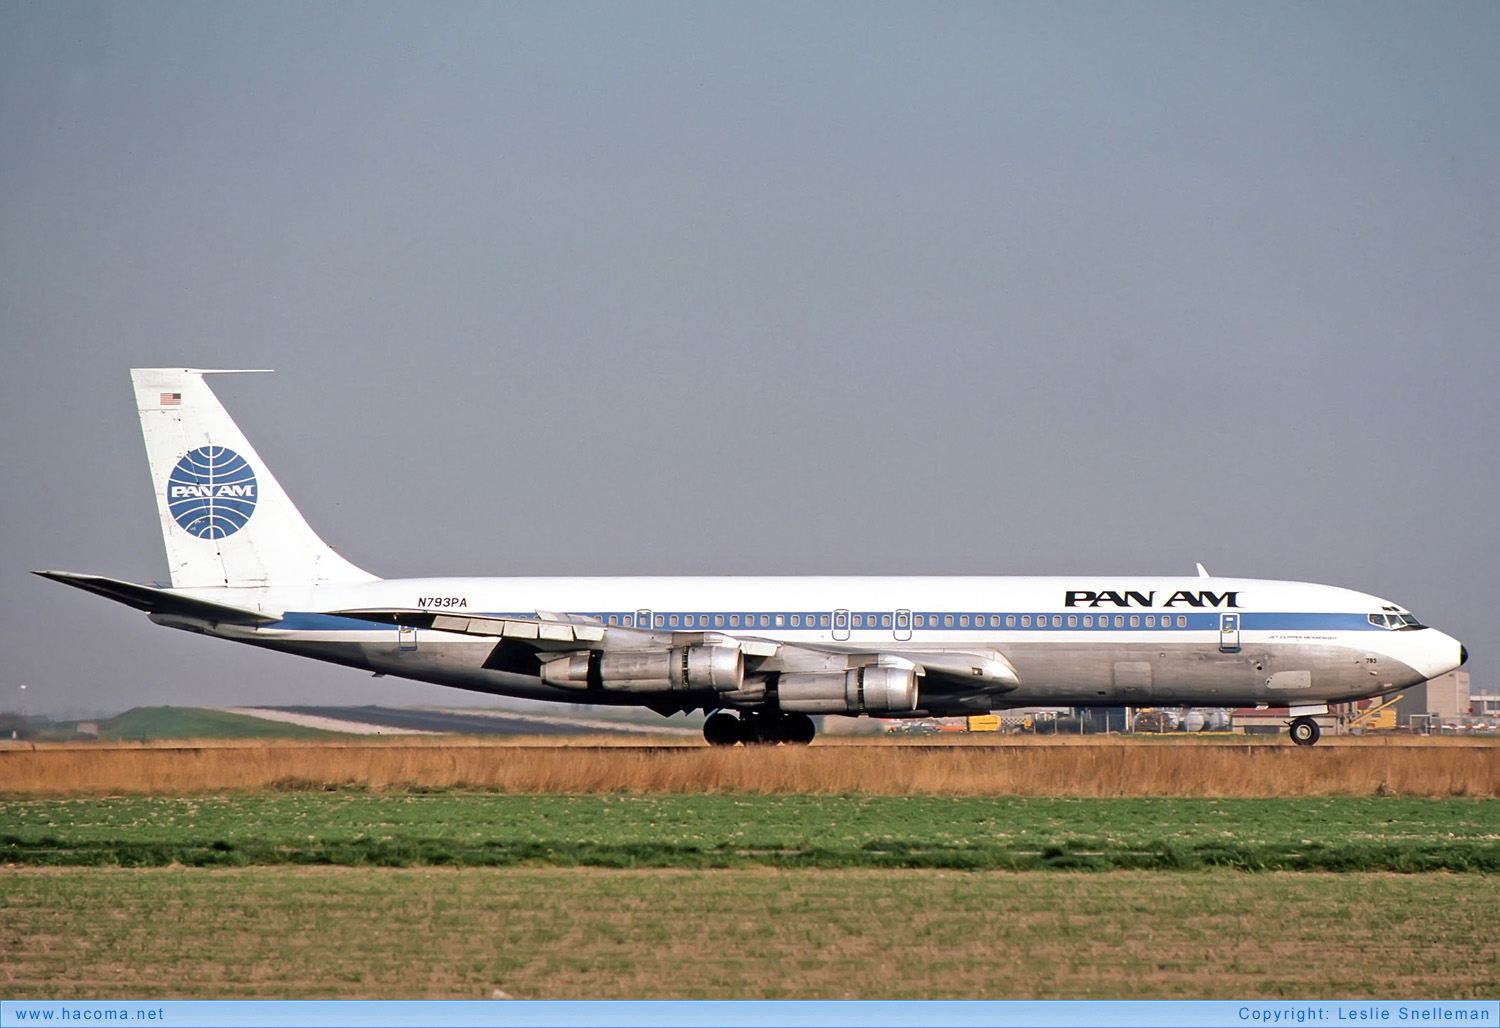 Photo of N793PA - Pan Am Clipper Messenger - Amsterdam Airport Schiphol - Apr 19, 1976